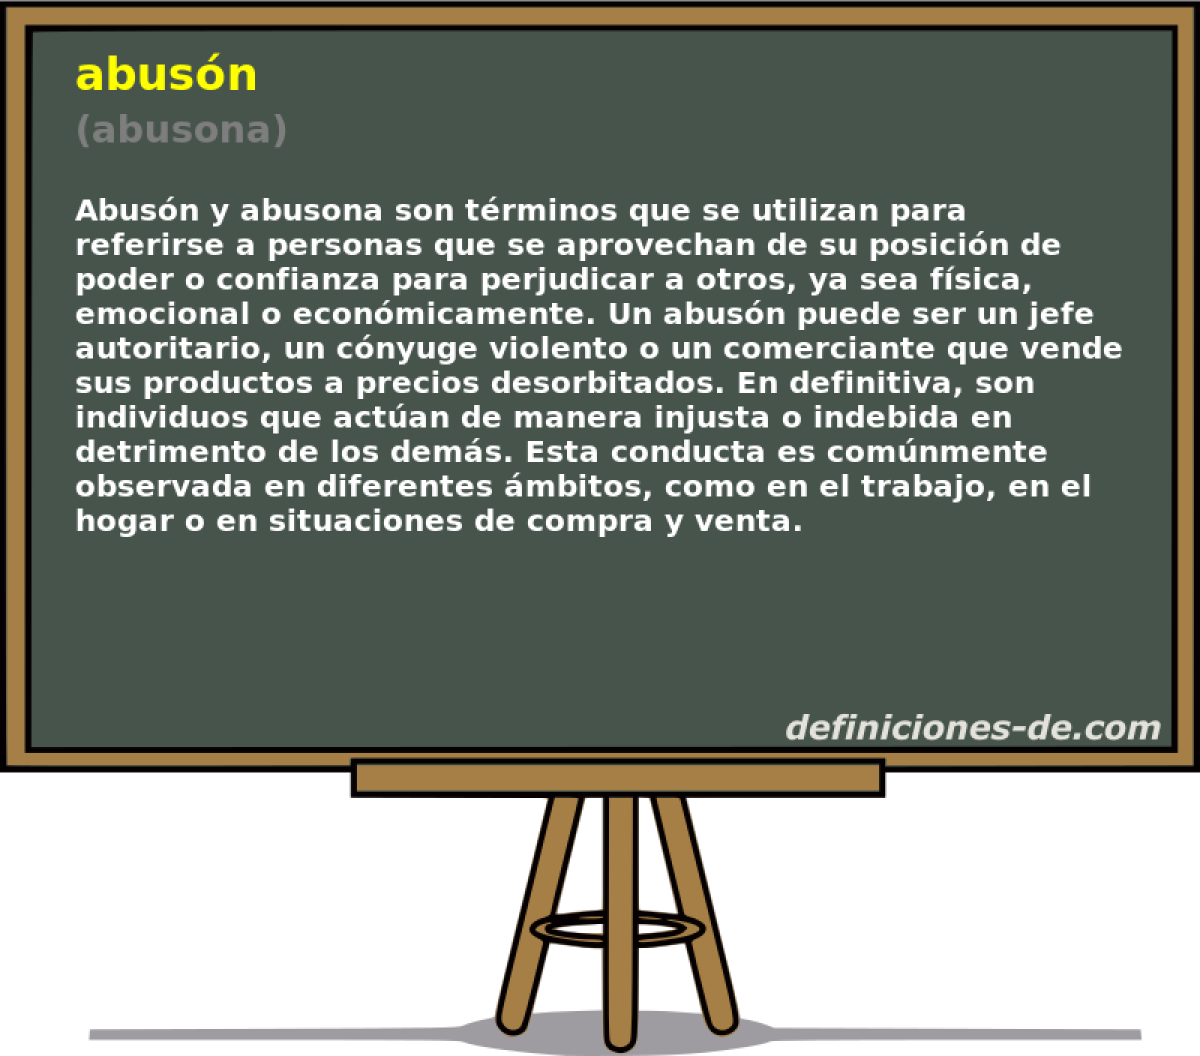 abusn (abusona)